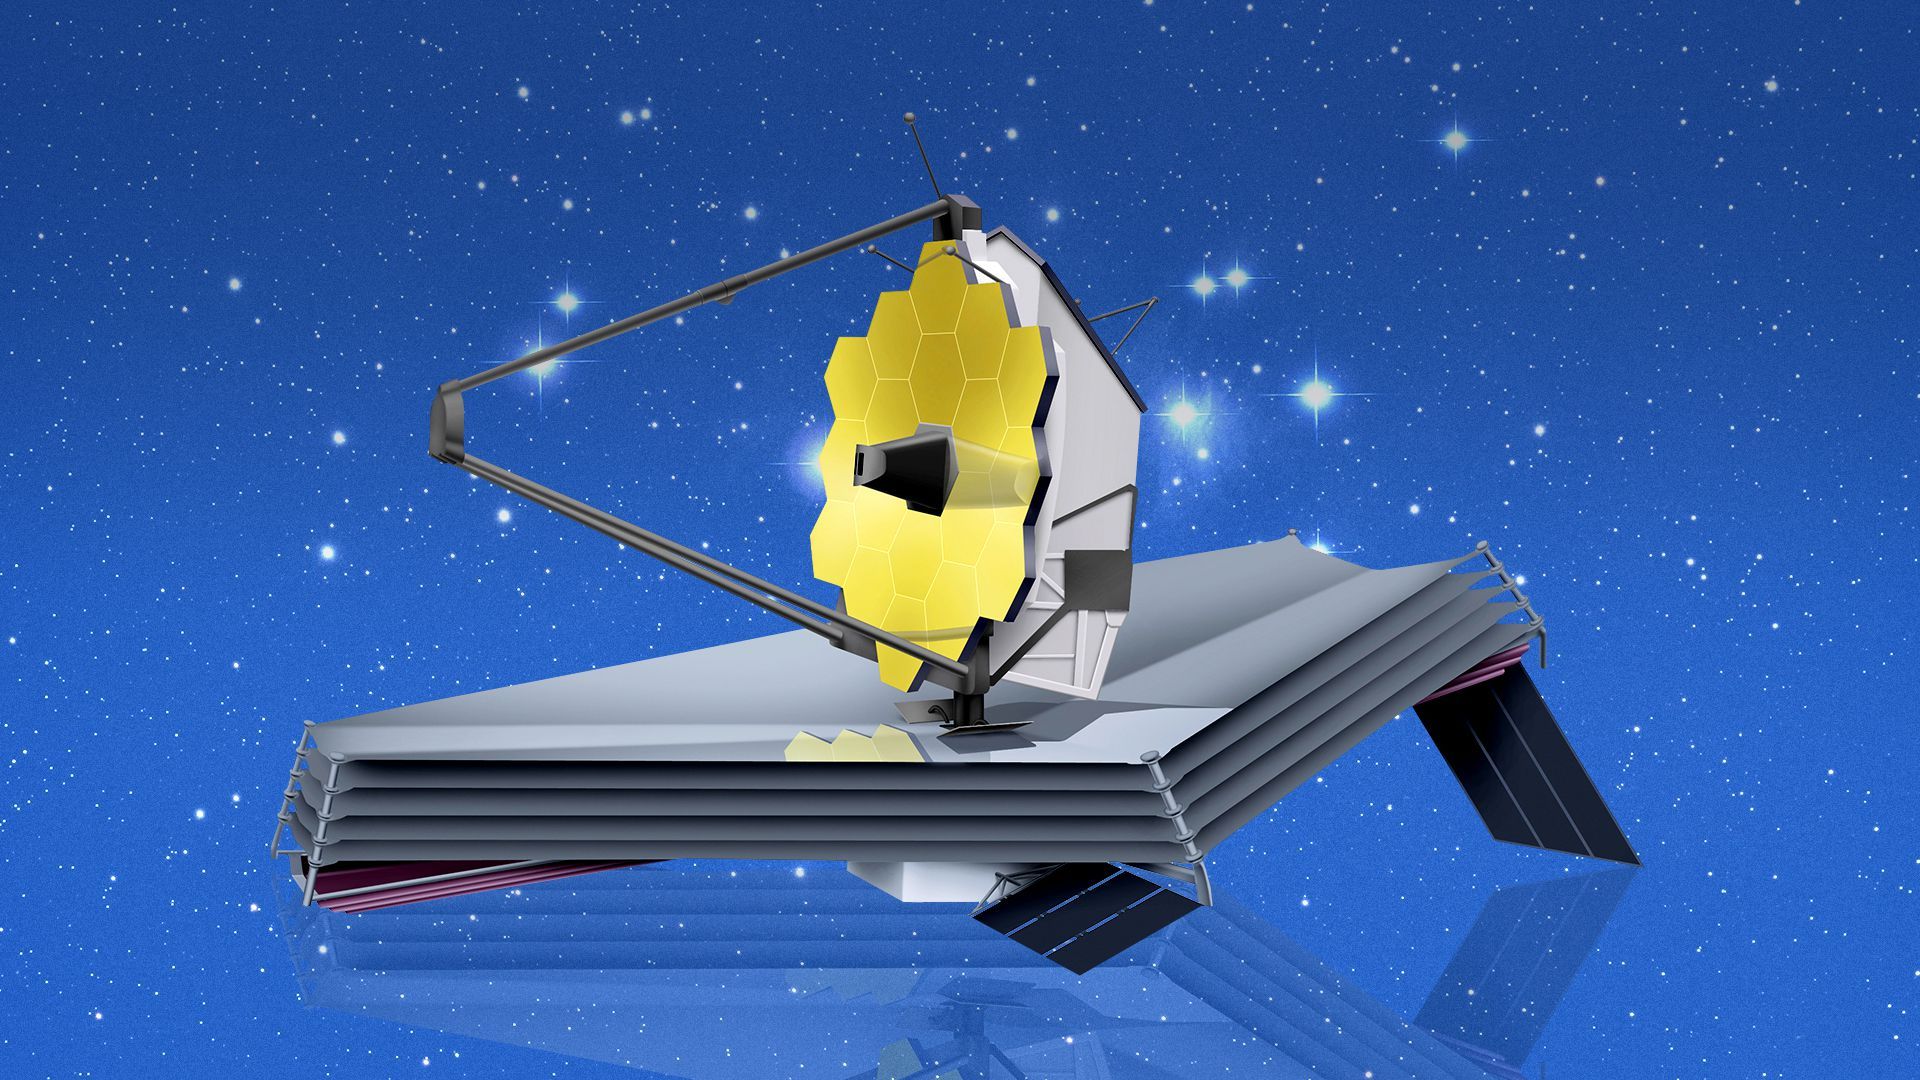 Photo illustration of the James Webb Space Telescope